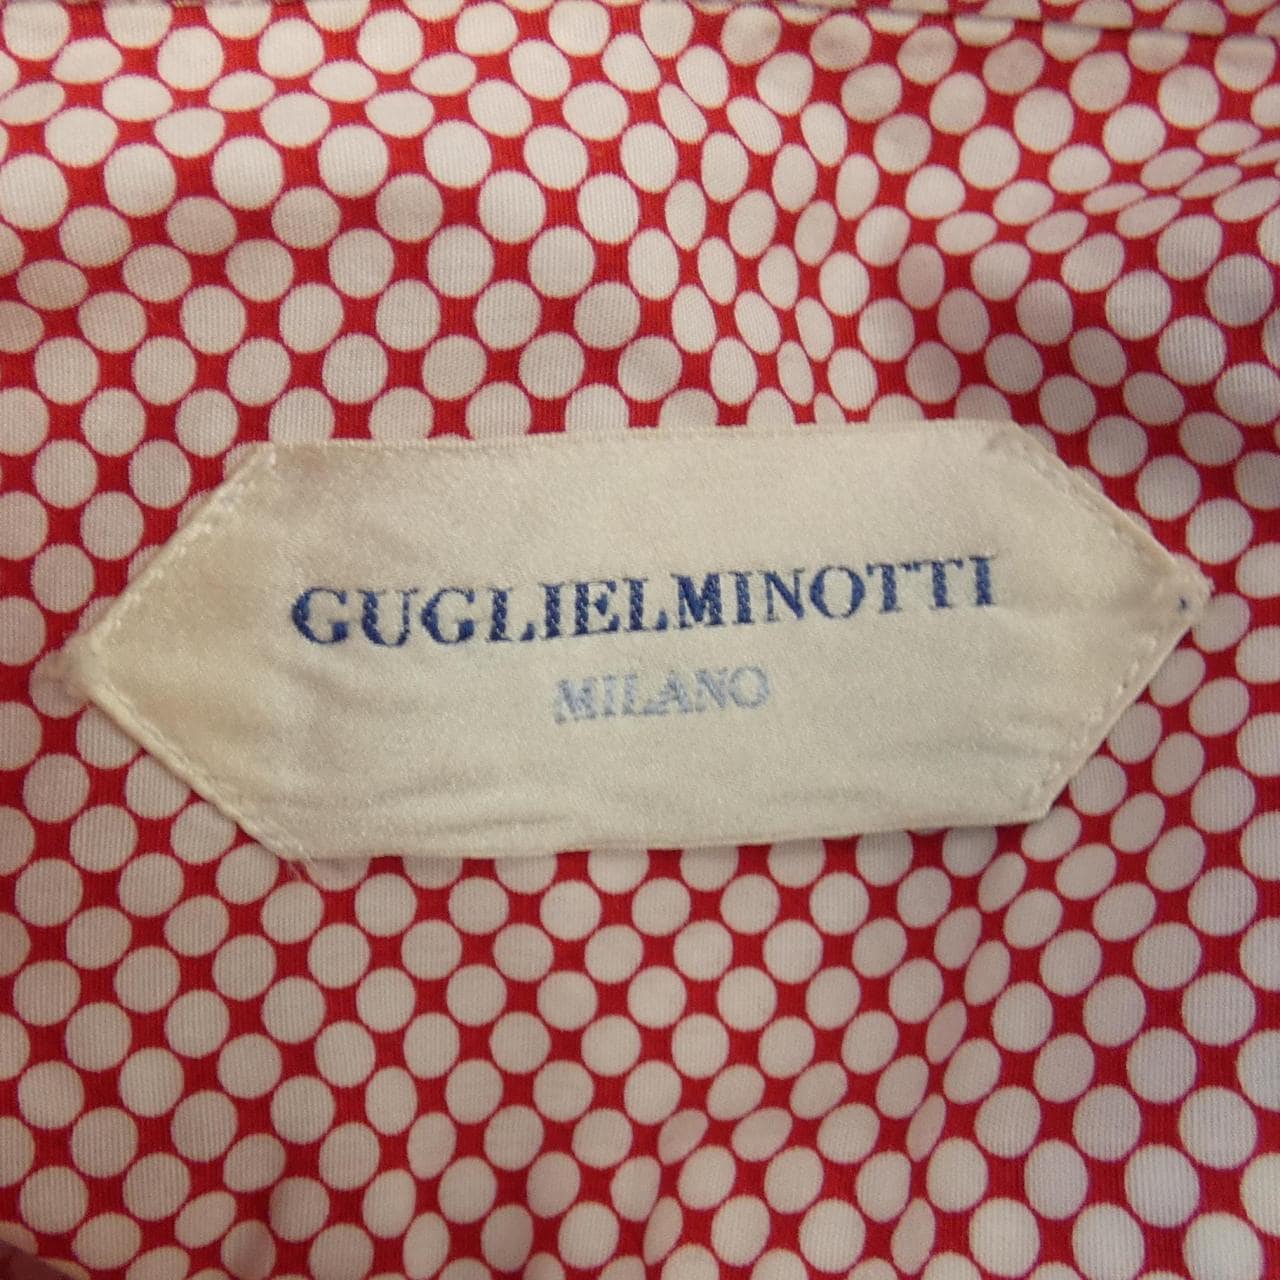 Gugliel Minotti GUGLIEL MINOTTI shirt